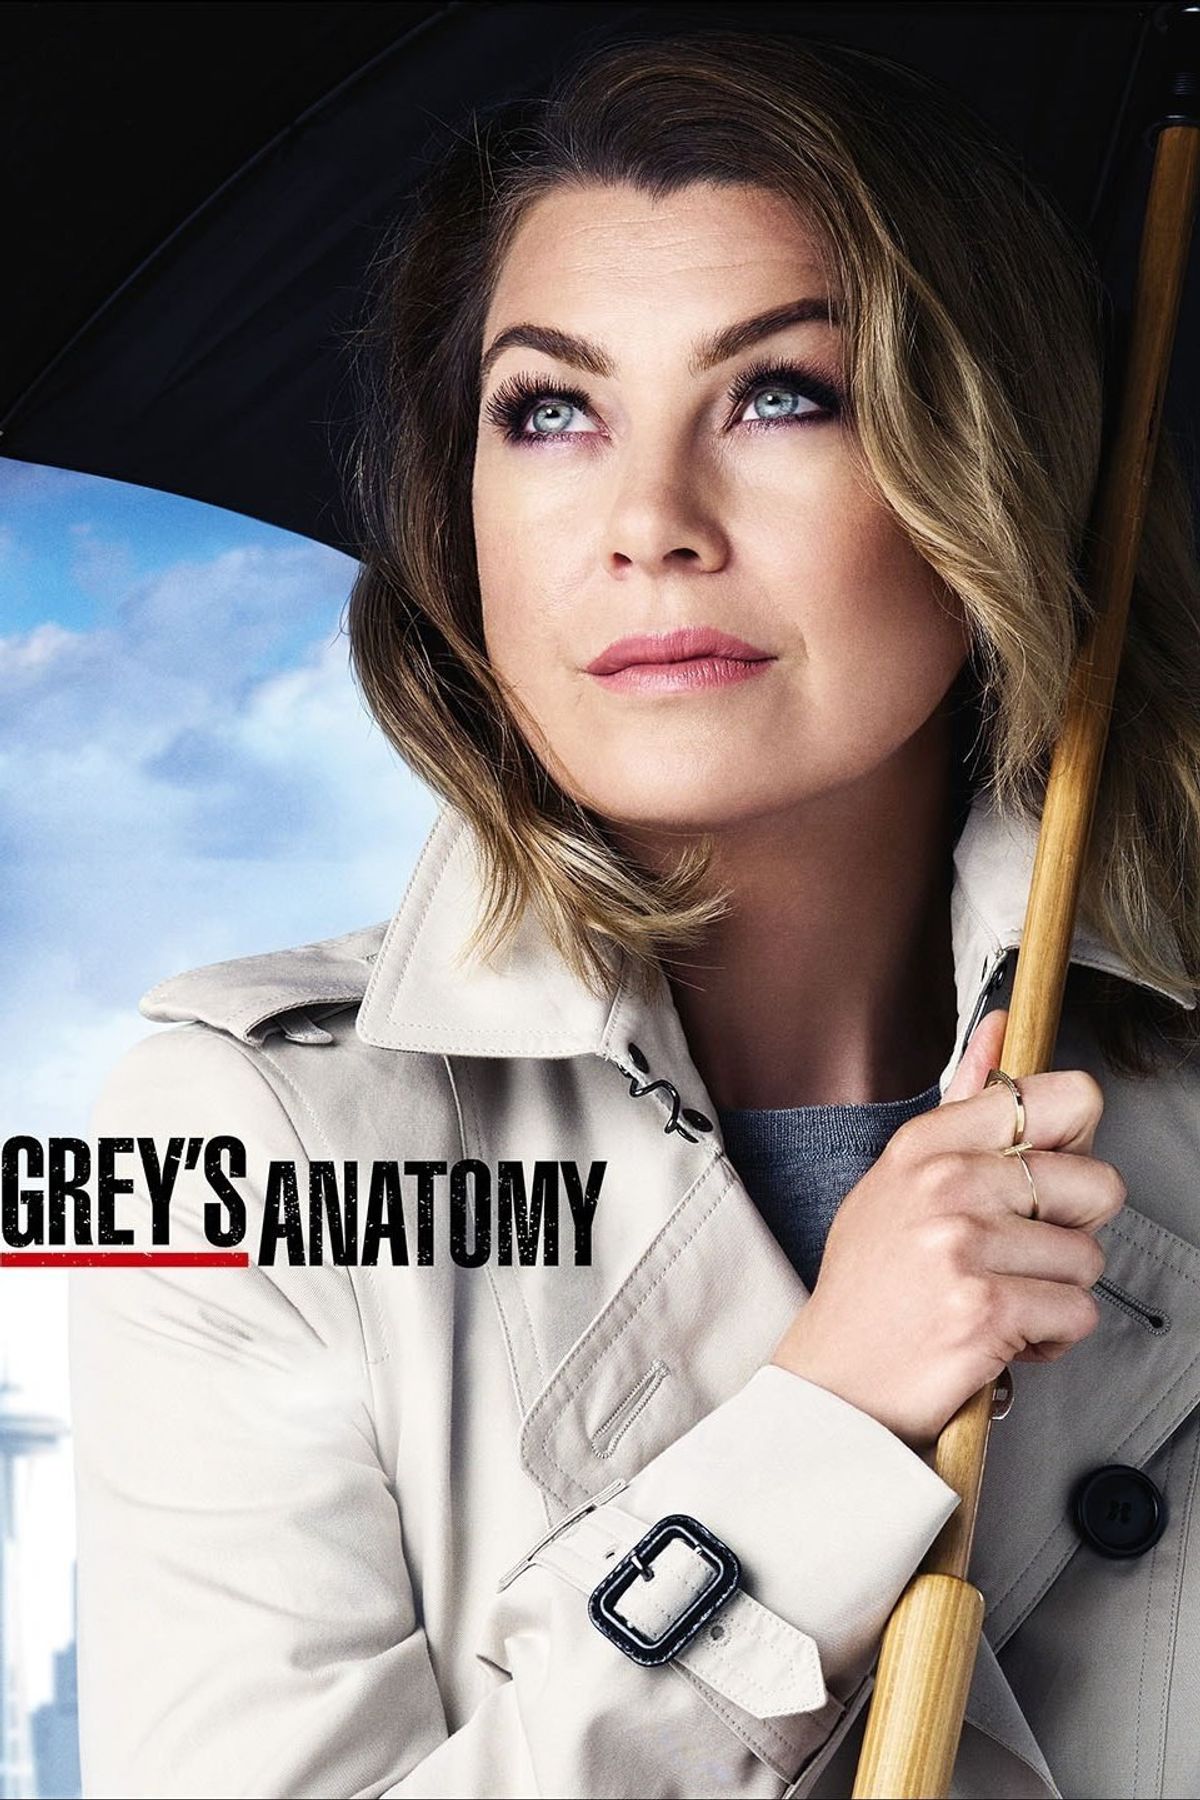 12 Questions For 'Grey's Anatomy' Season 13